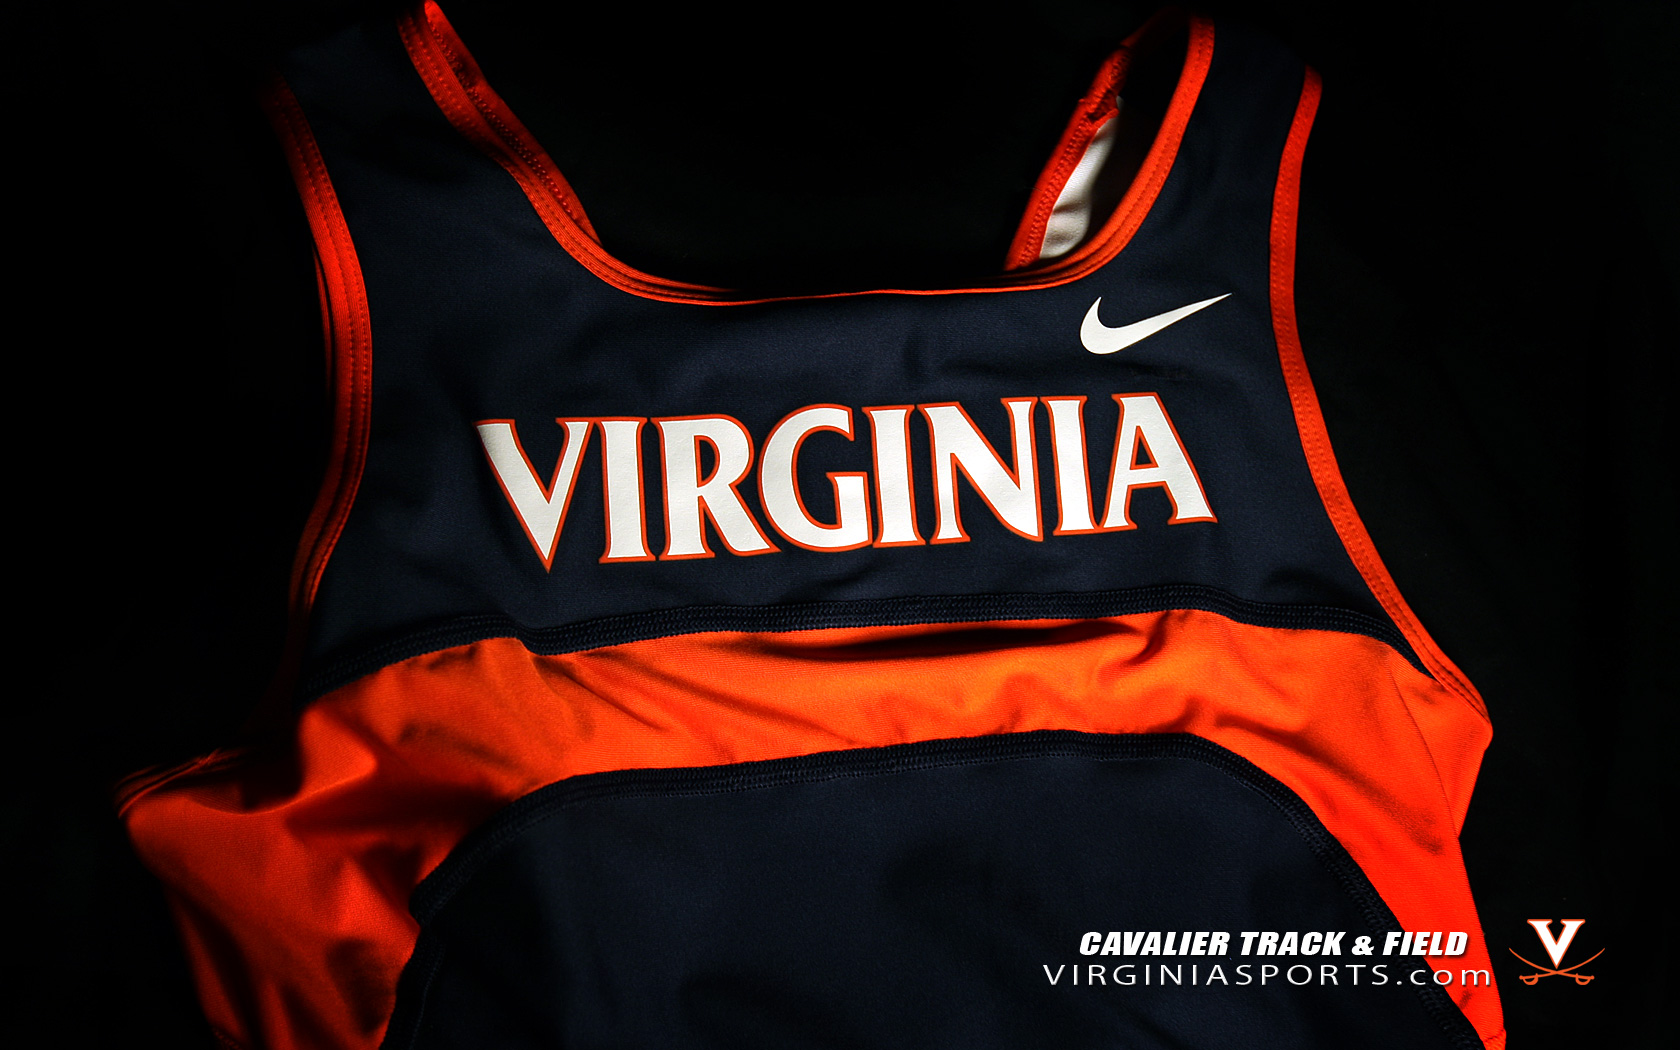 University Of Virginia Official Athletics Website Uva Cavaliers